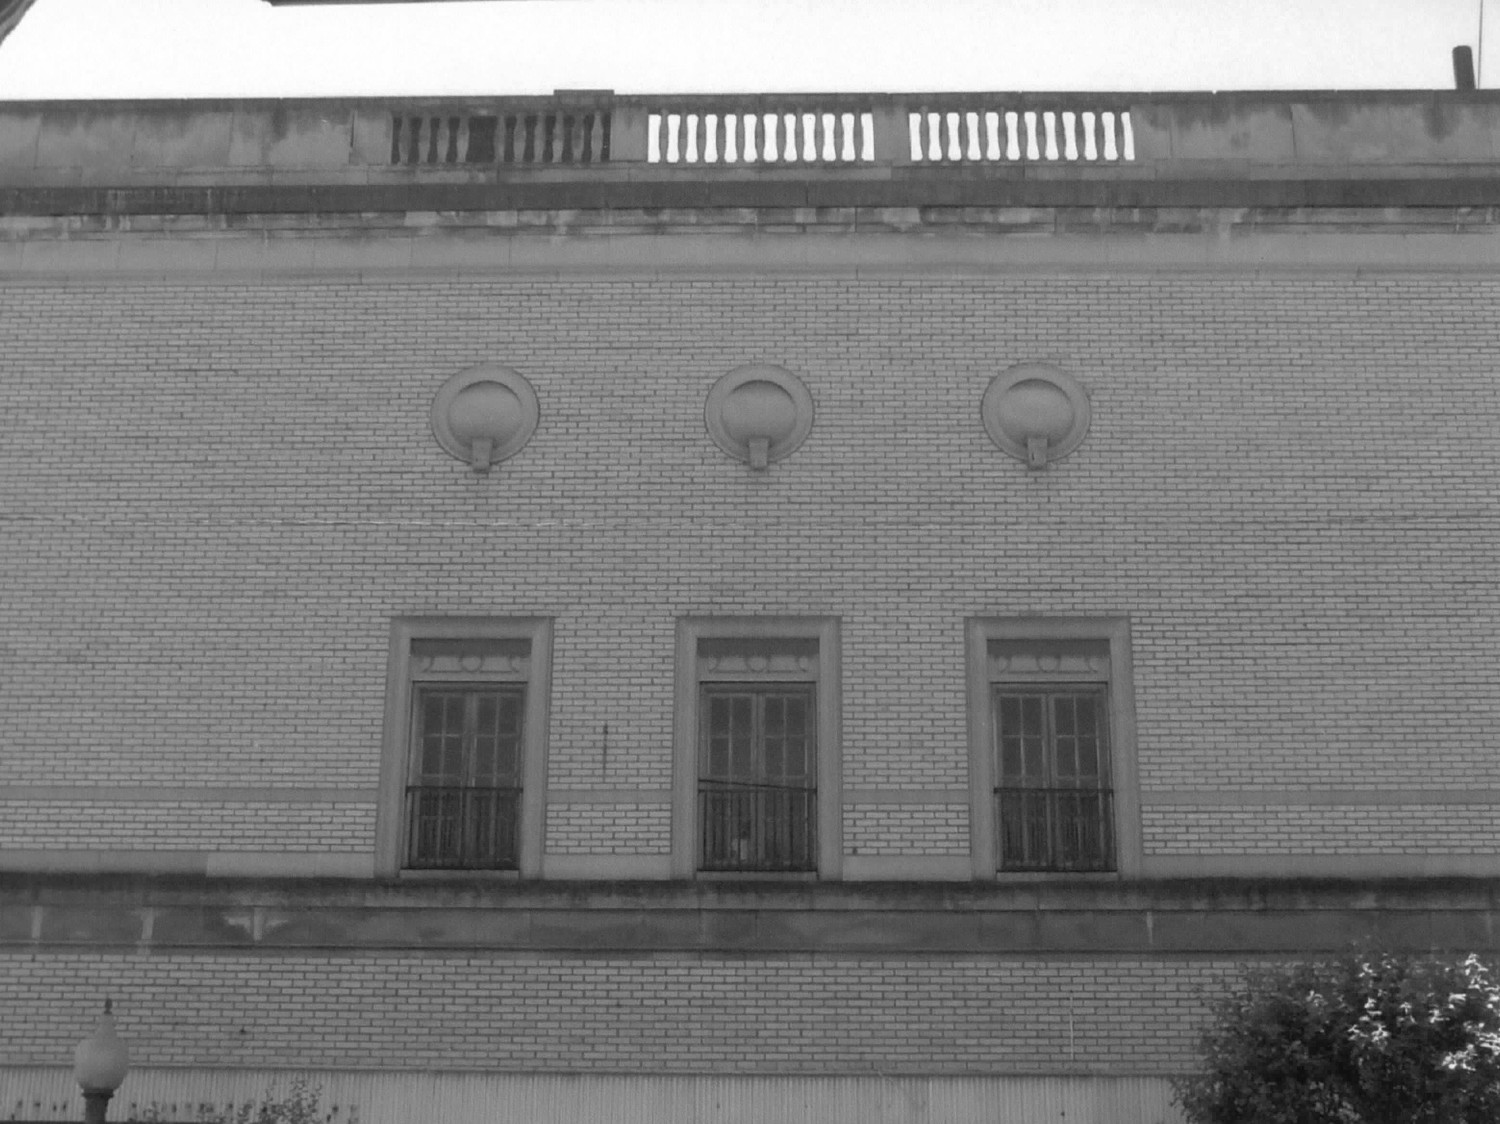 Marlow Theater, Ironton Ohio Third St. facade detail (2007)